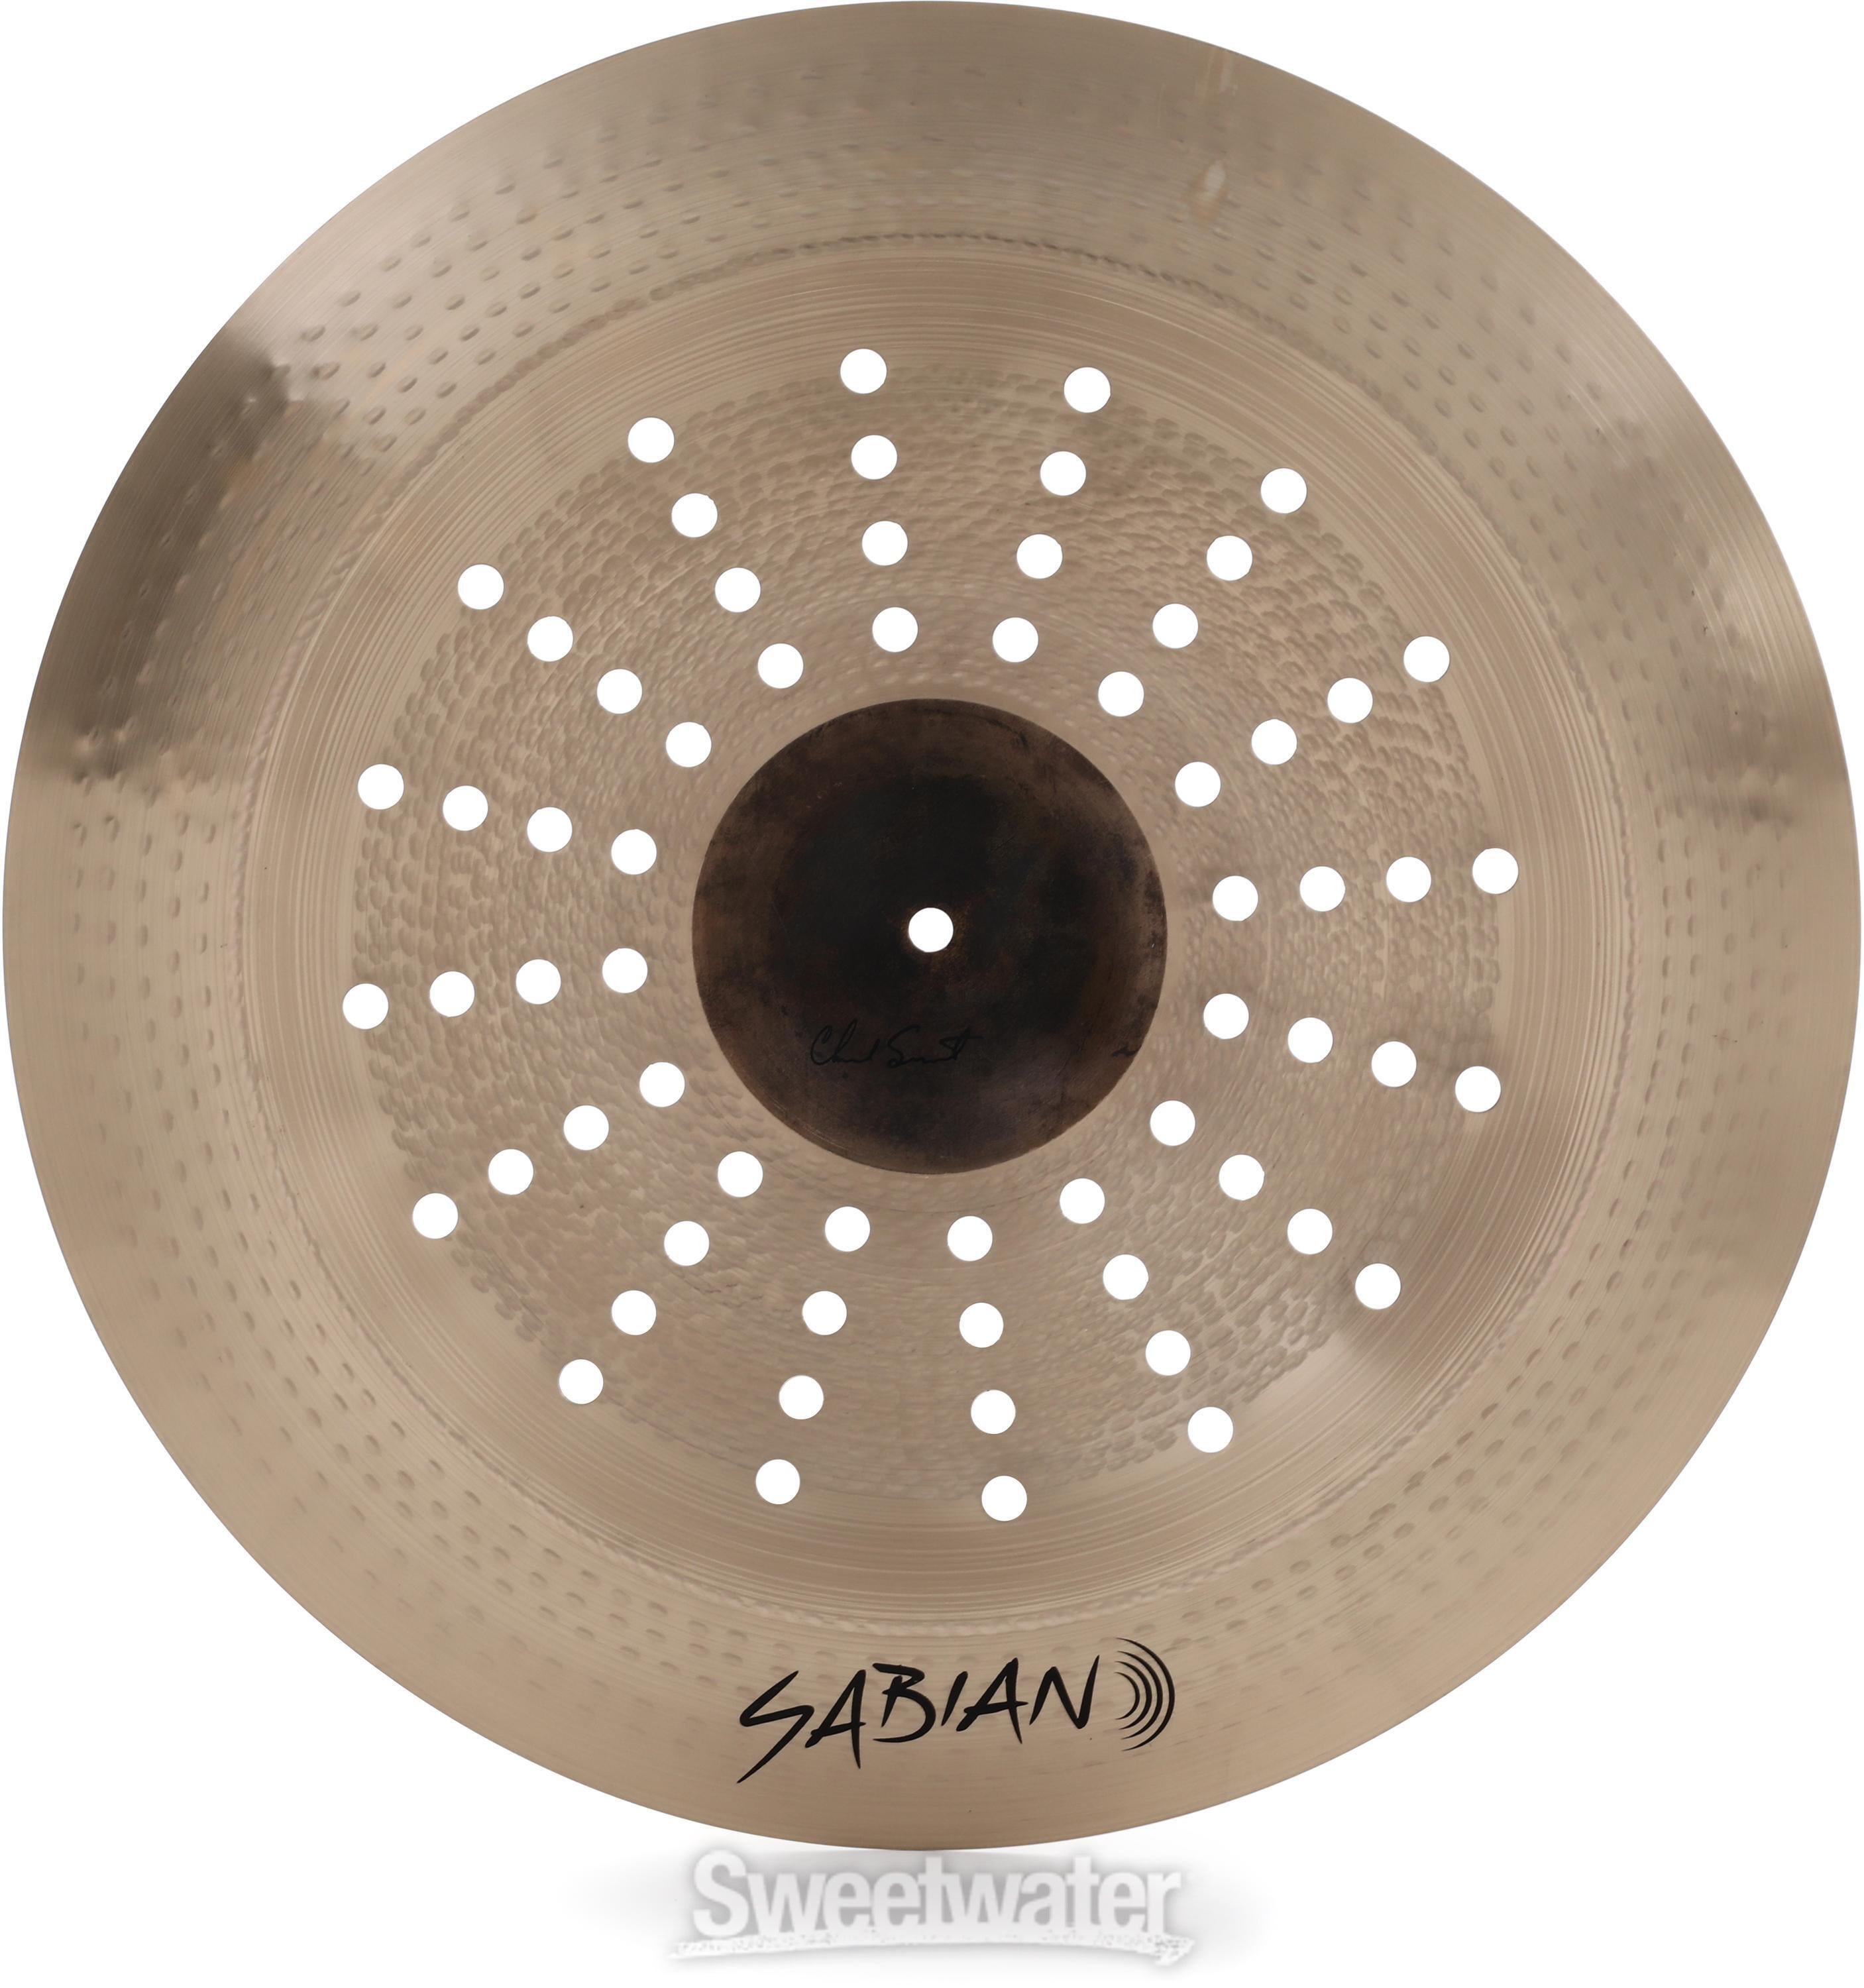 Sabian 21 inch AA Holy China Cymbal